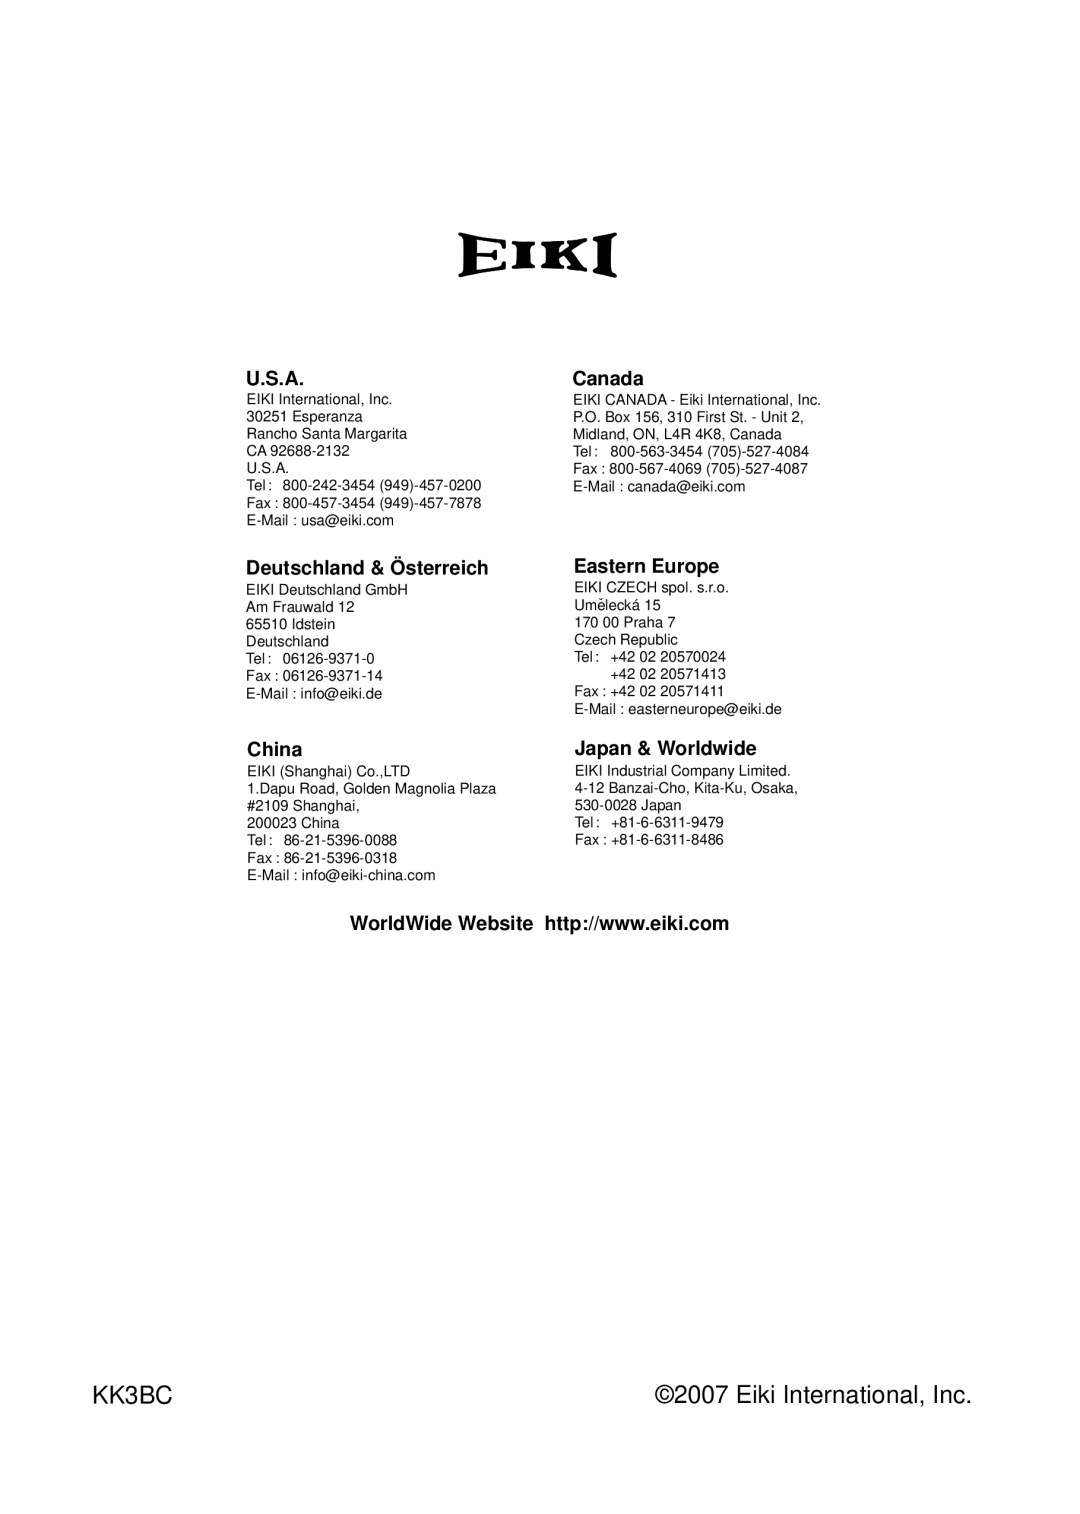 Eiki LC-XB21A owner manual KK3BC, Eiki International, Inc, U..S..A, Deutschland & Österreich, China, Canada, Eastern Europe 